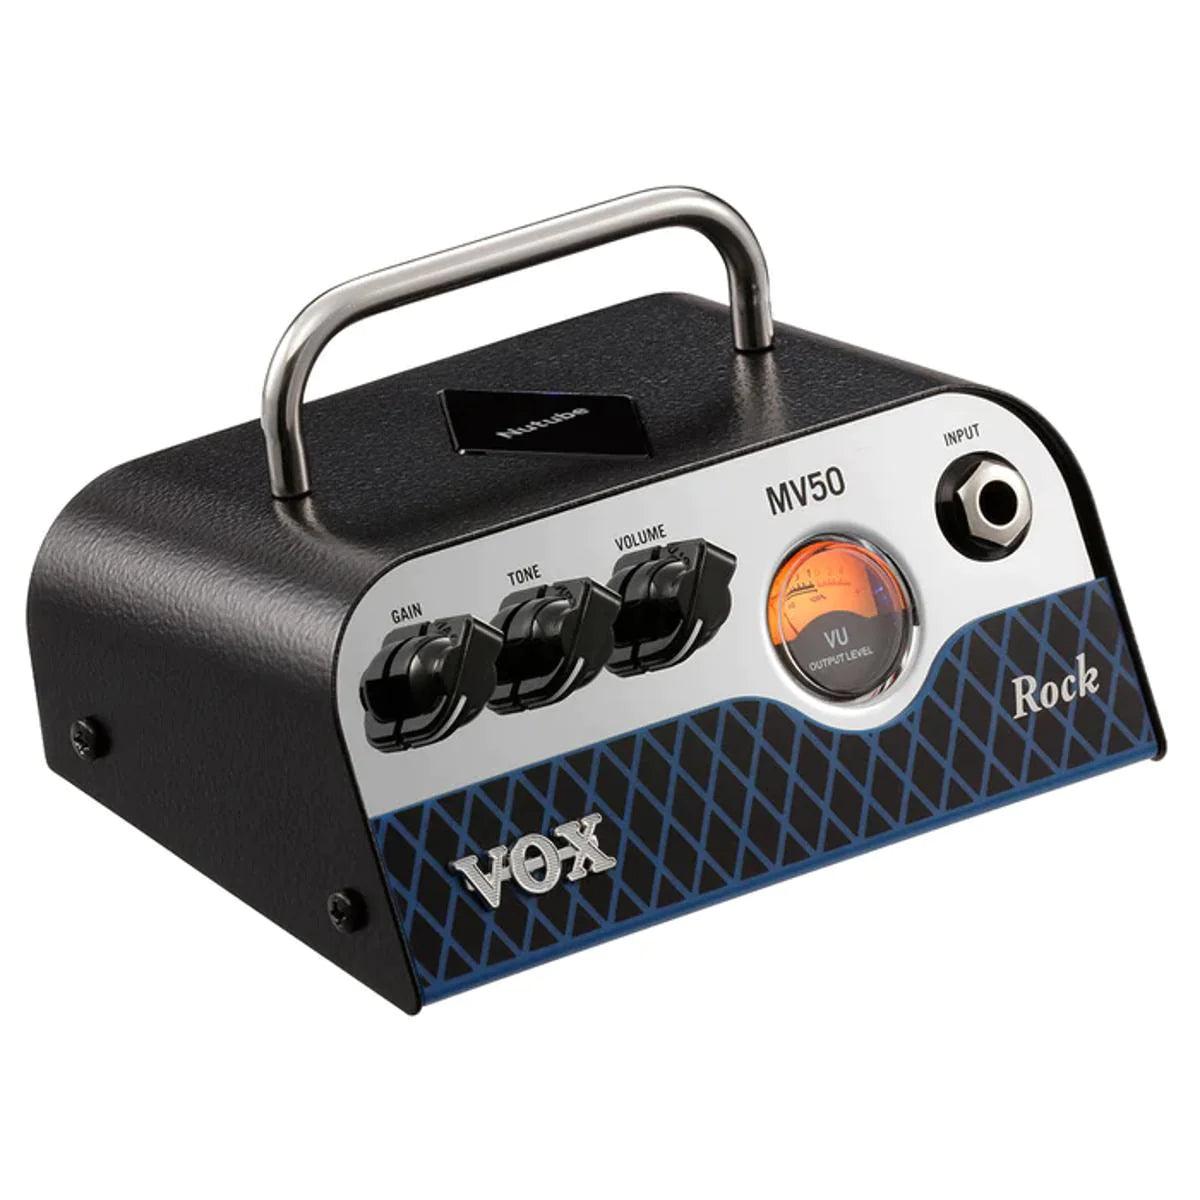 Vox MV50 Classic Rock Mini Amp Head - Guitars - Amplifiers by VOX at Muso's Stuff